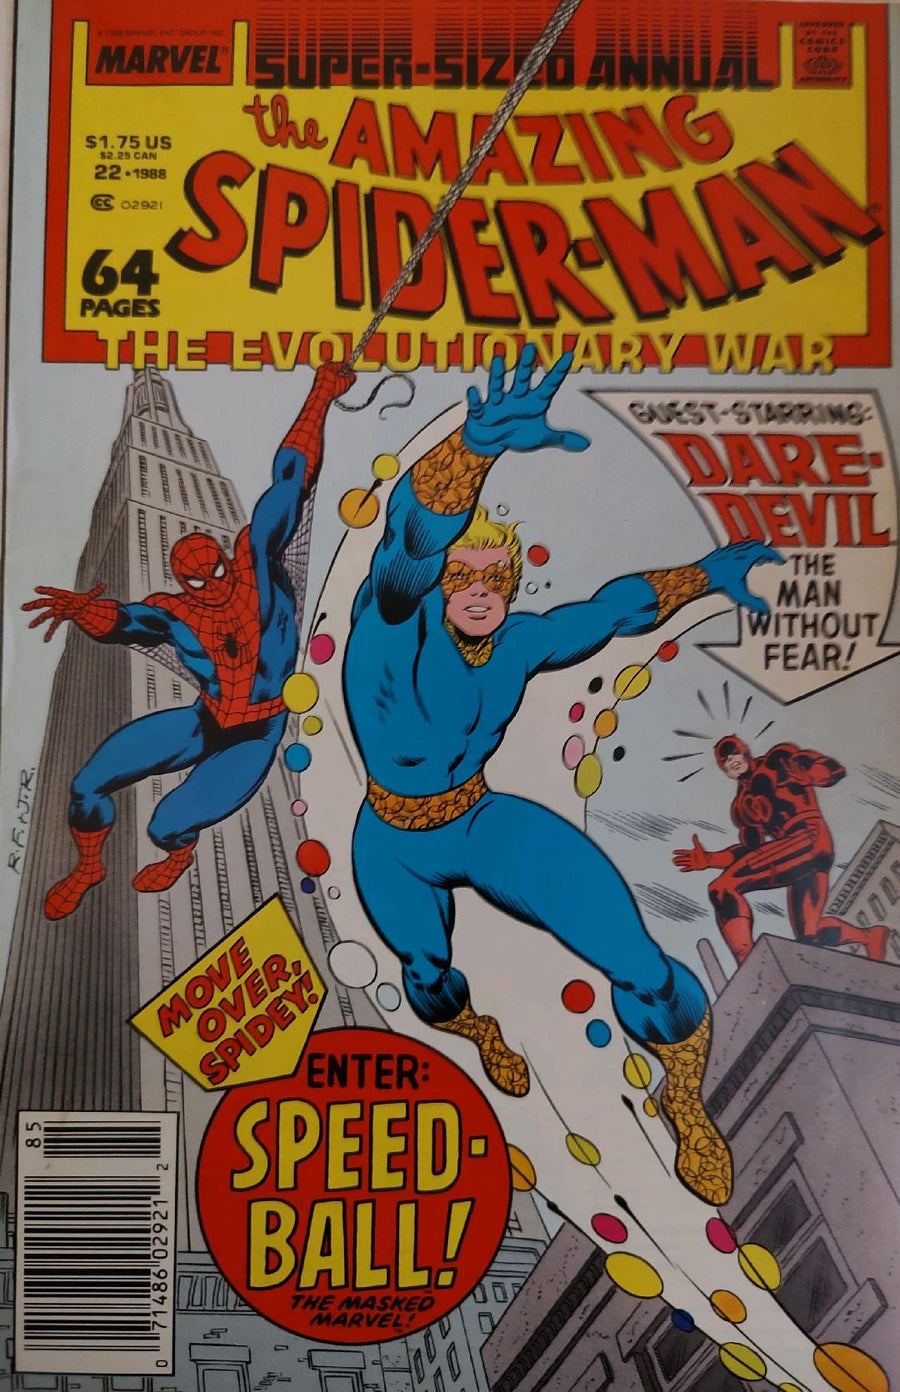 The Amazing Spiderman Annual #22 Comic Book Cover